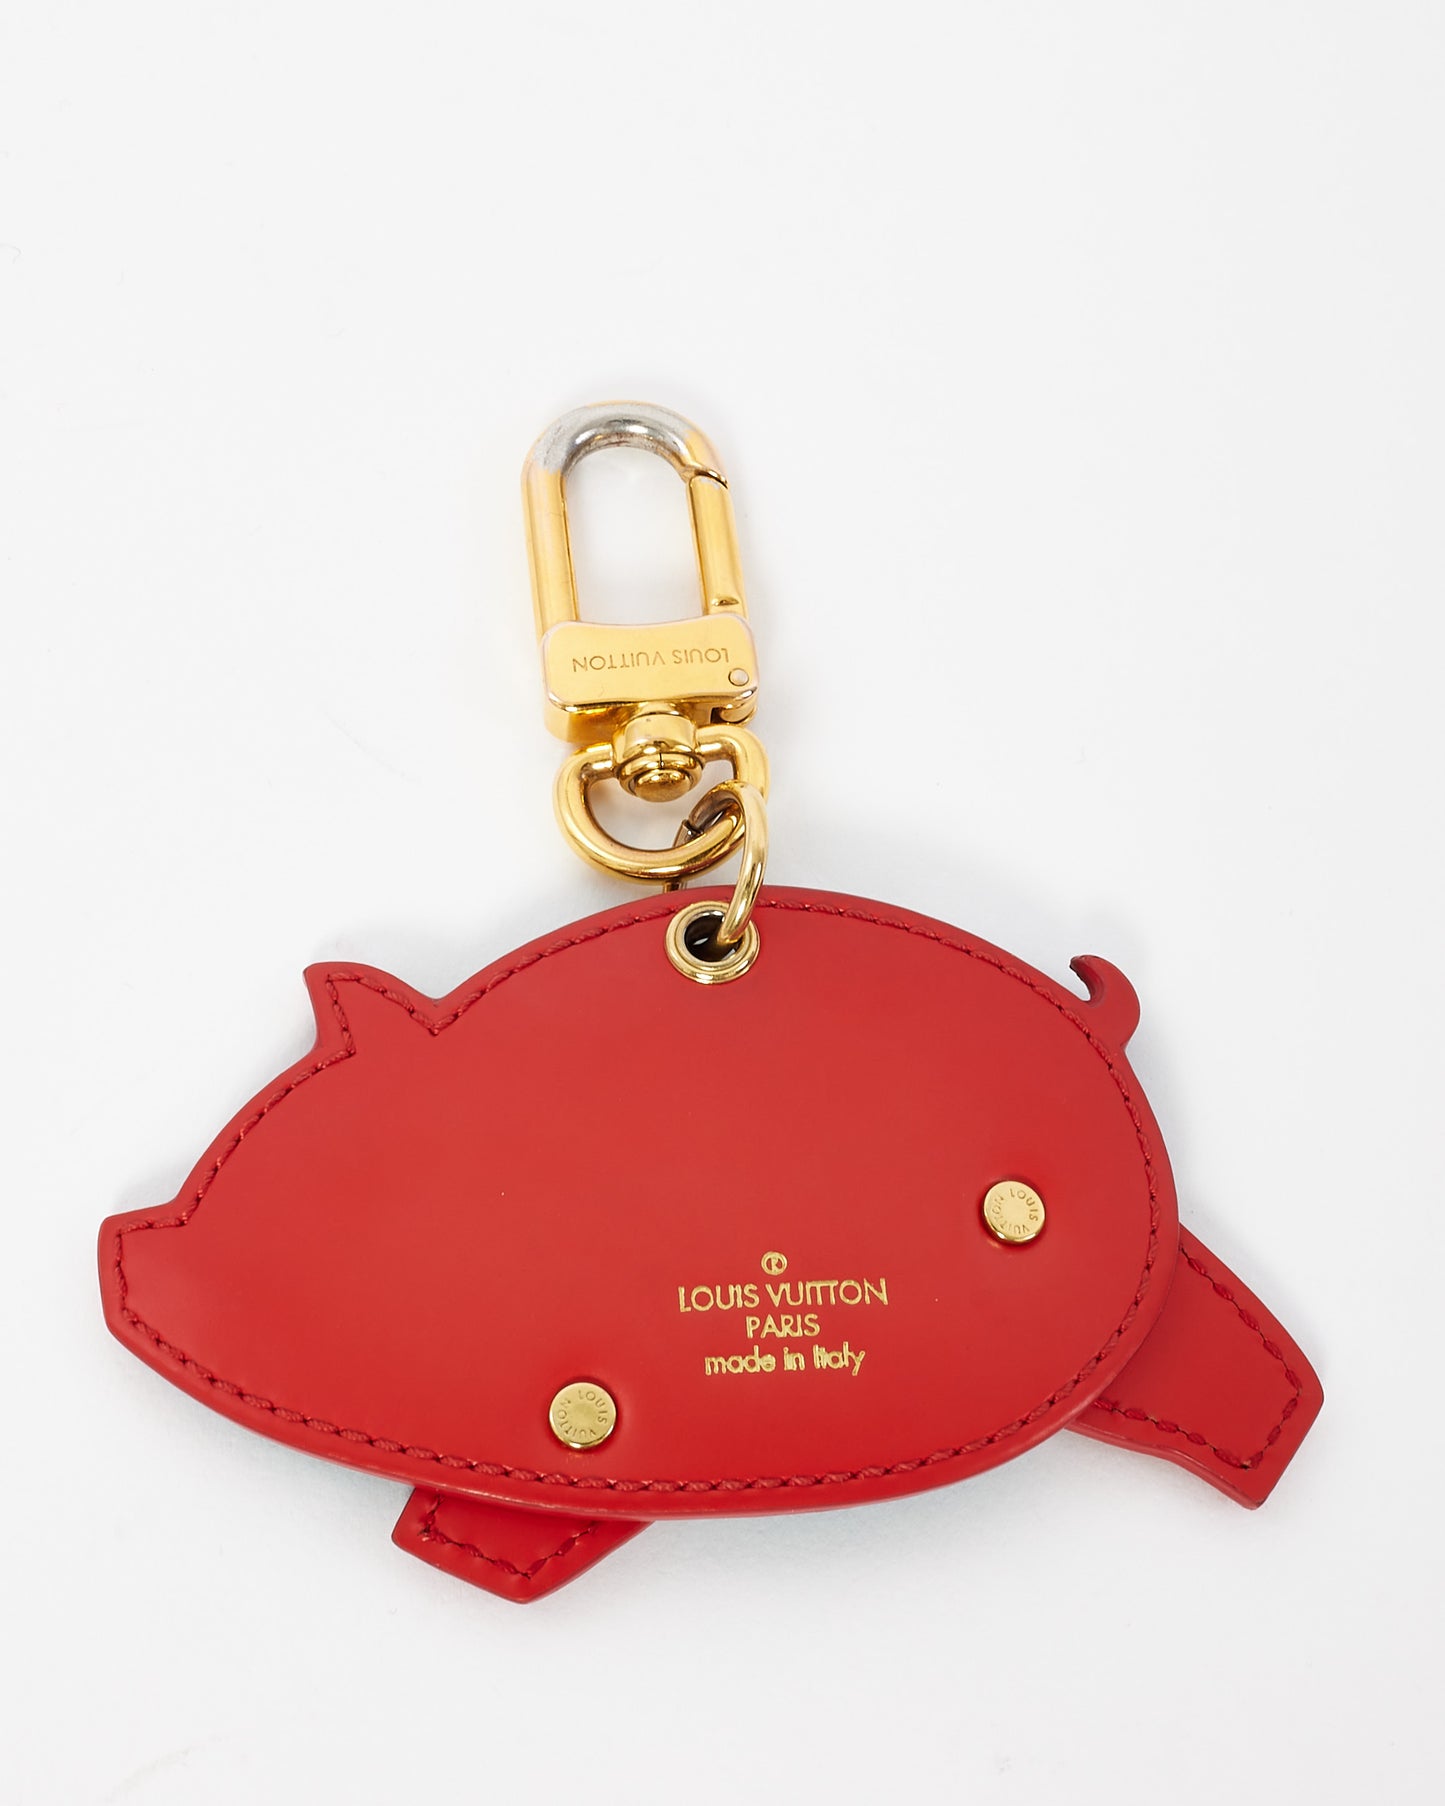 Louis Vuitton Monogram Canvas & Red Pig Bag Charm